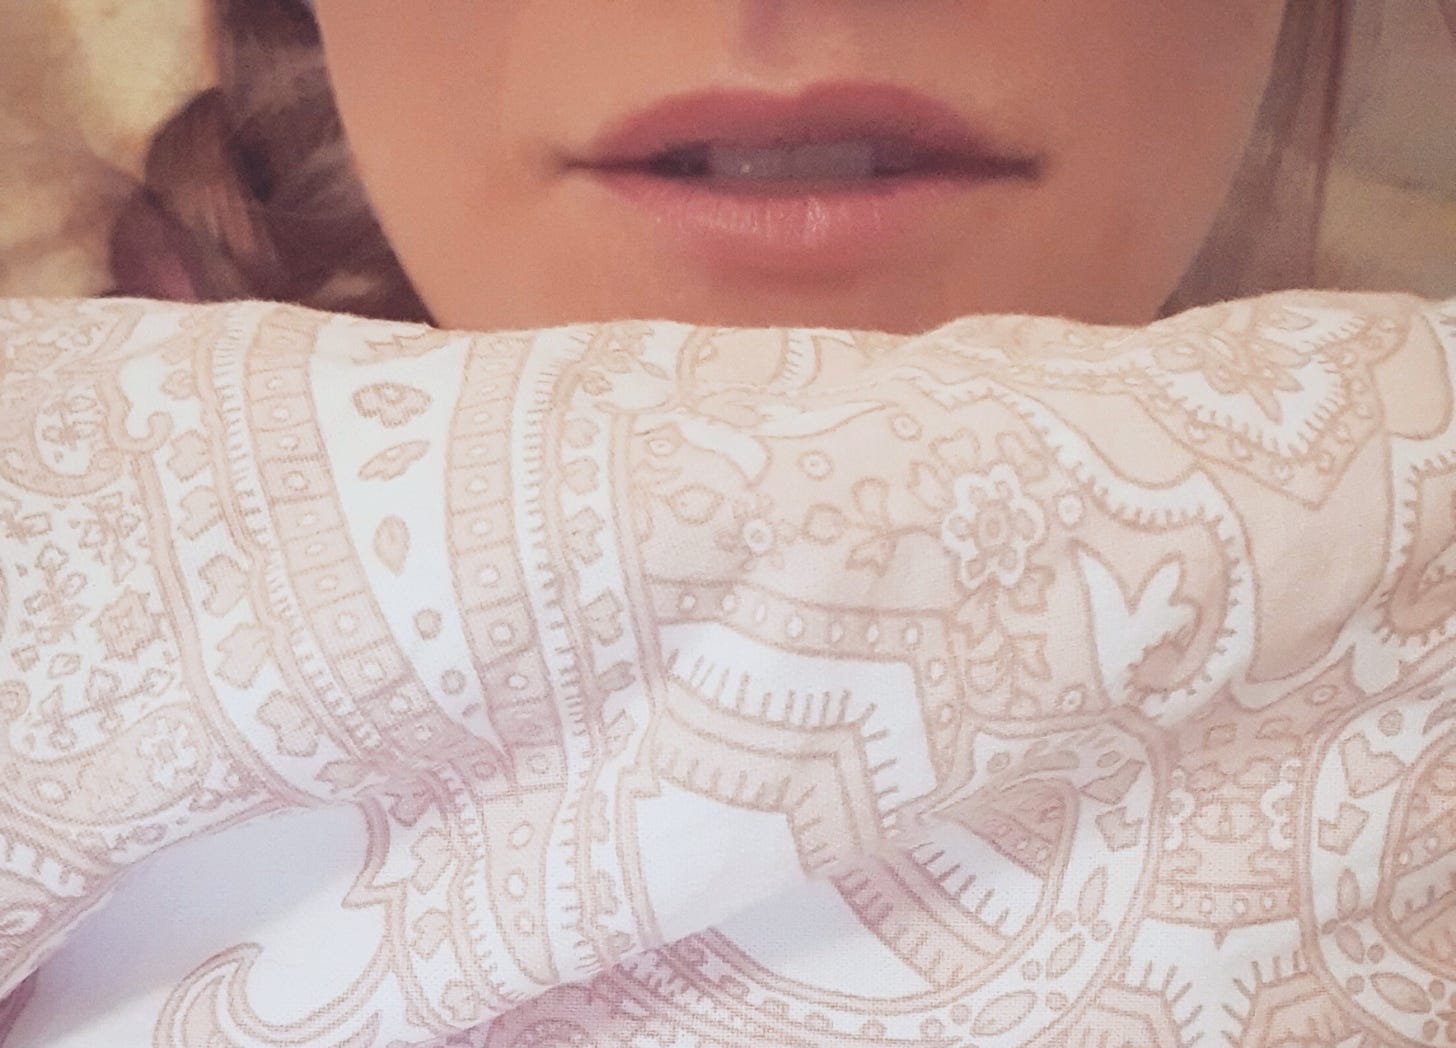 Female sensual lips under the blanket